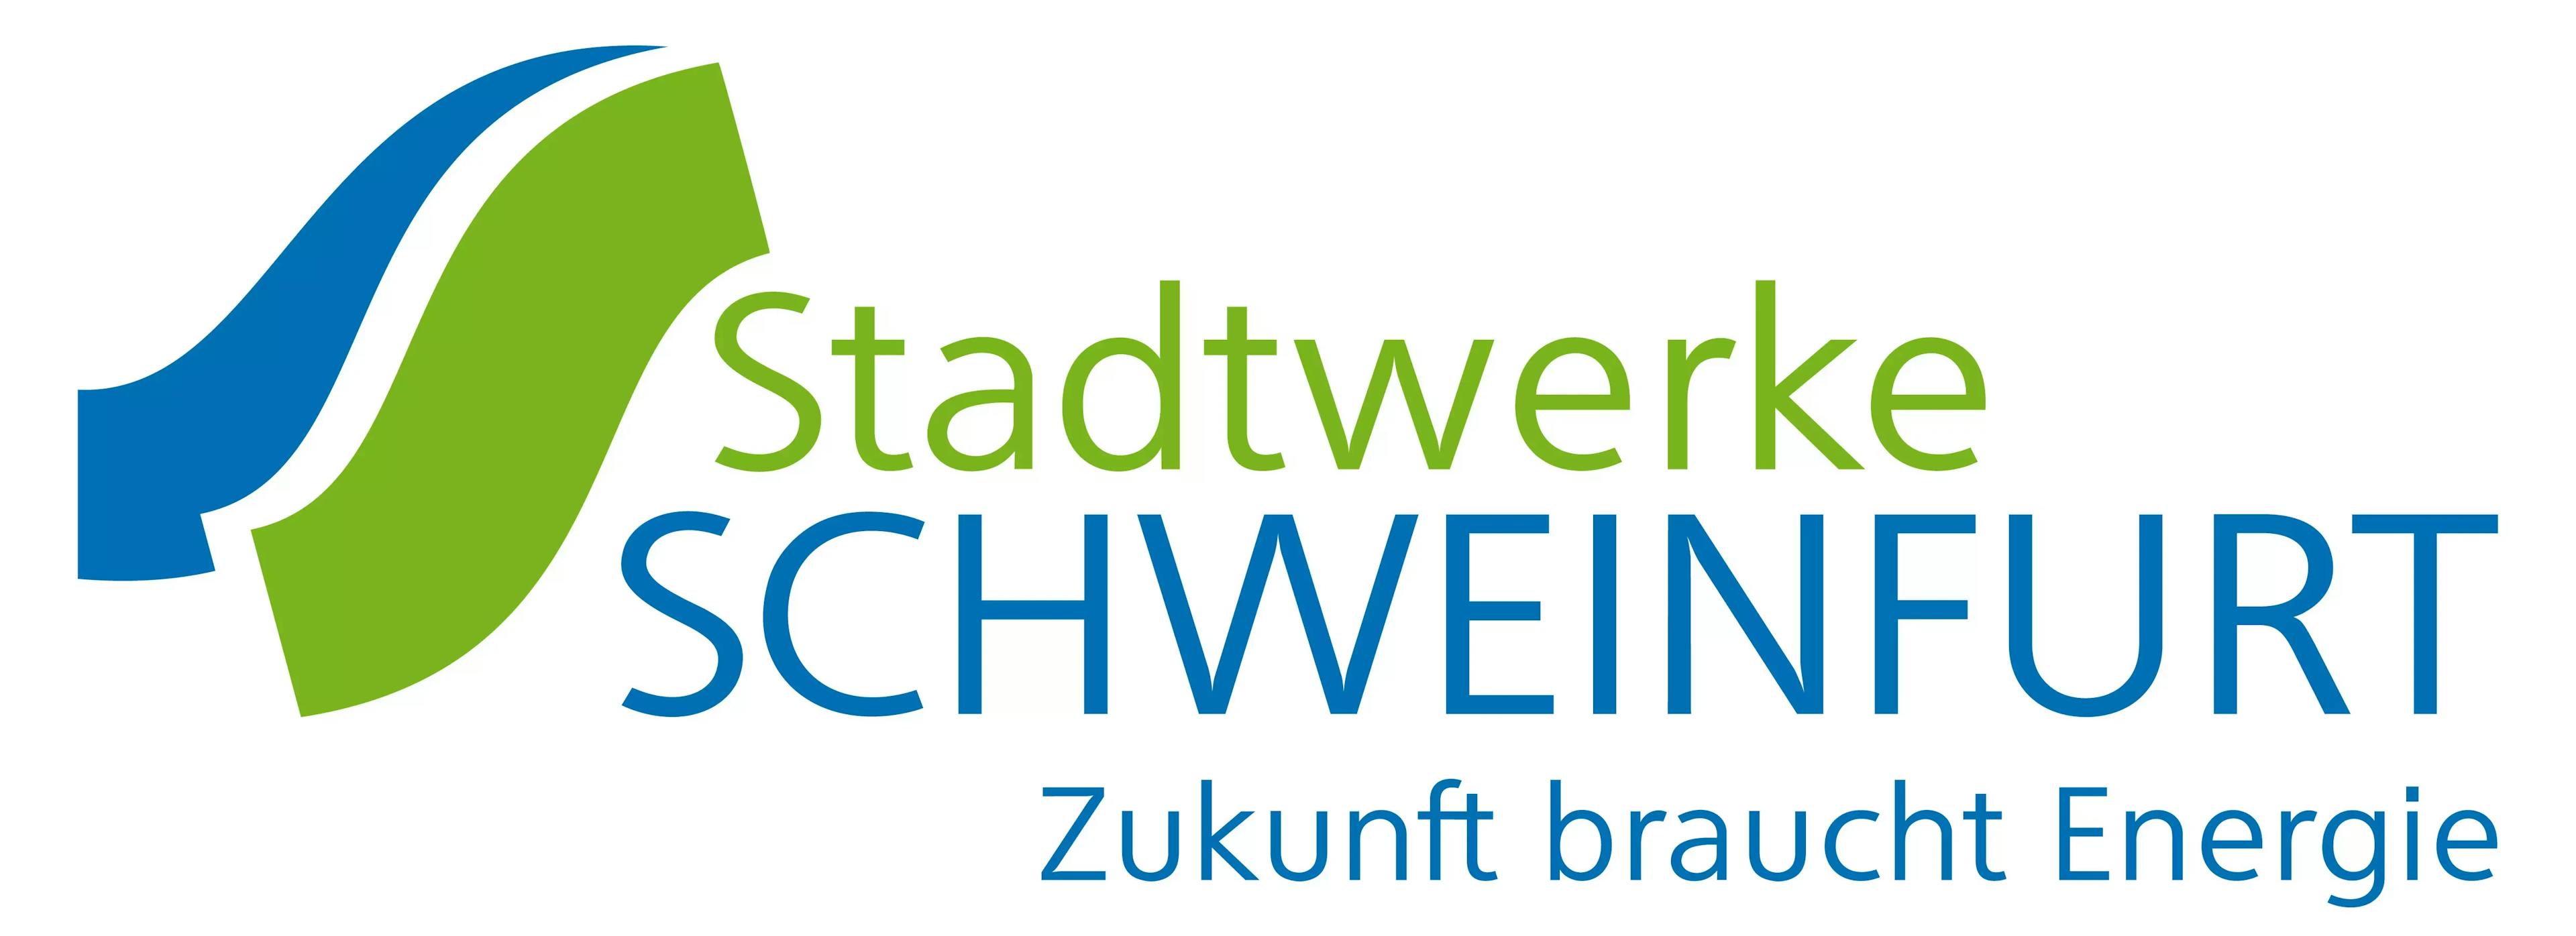 Stadtwerke Schweinfurt GmbH logo